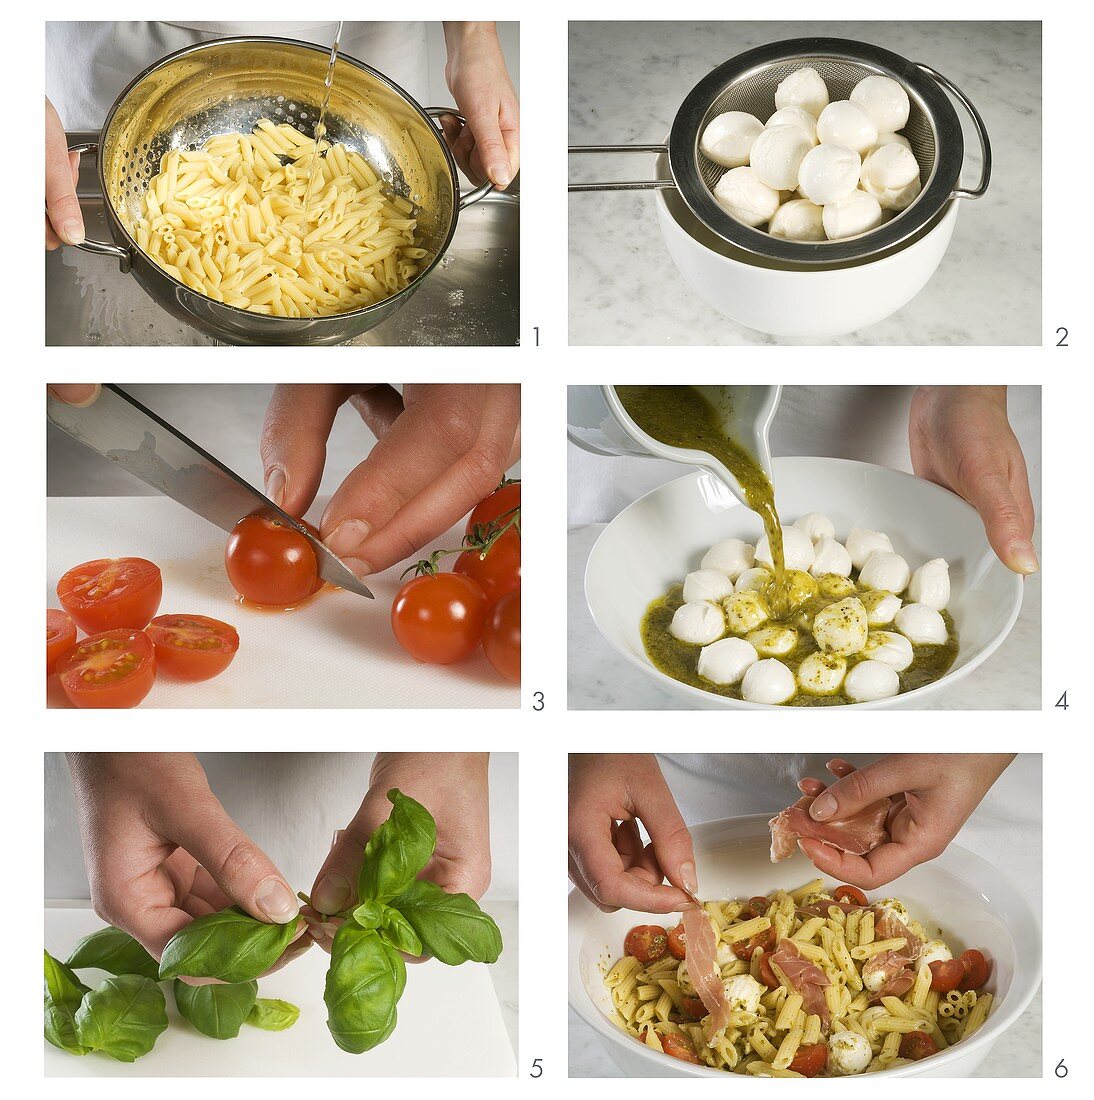 Making pasta salad with mozzarella, pesto and Parma ham